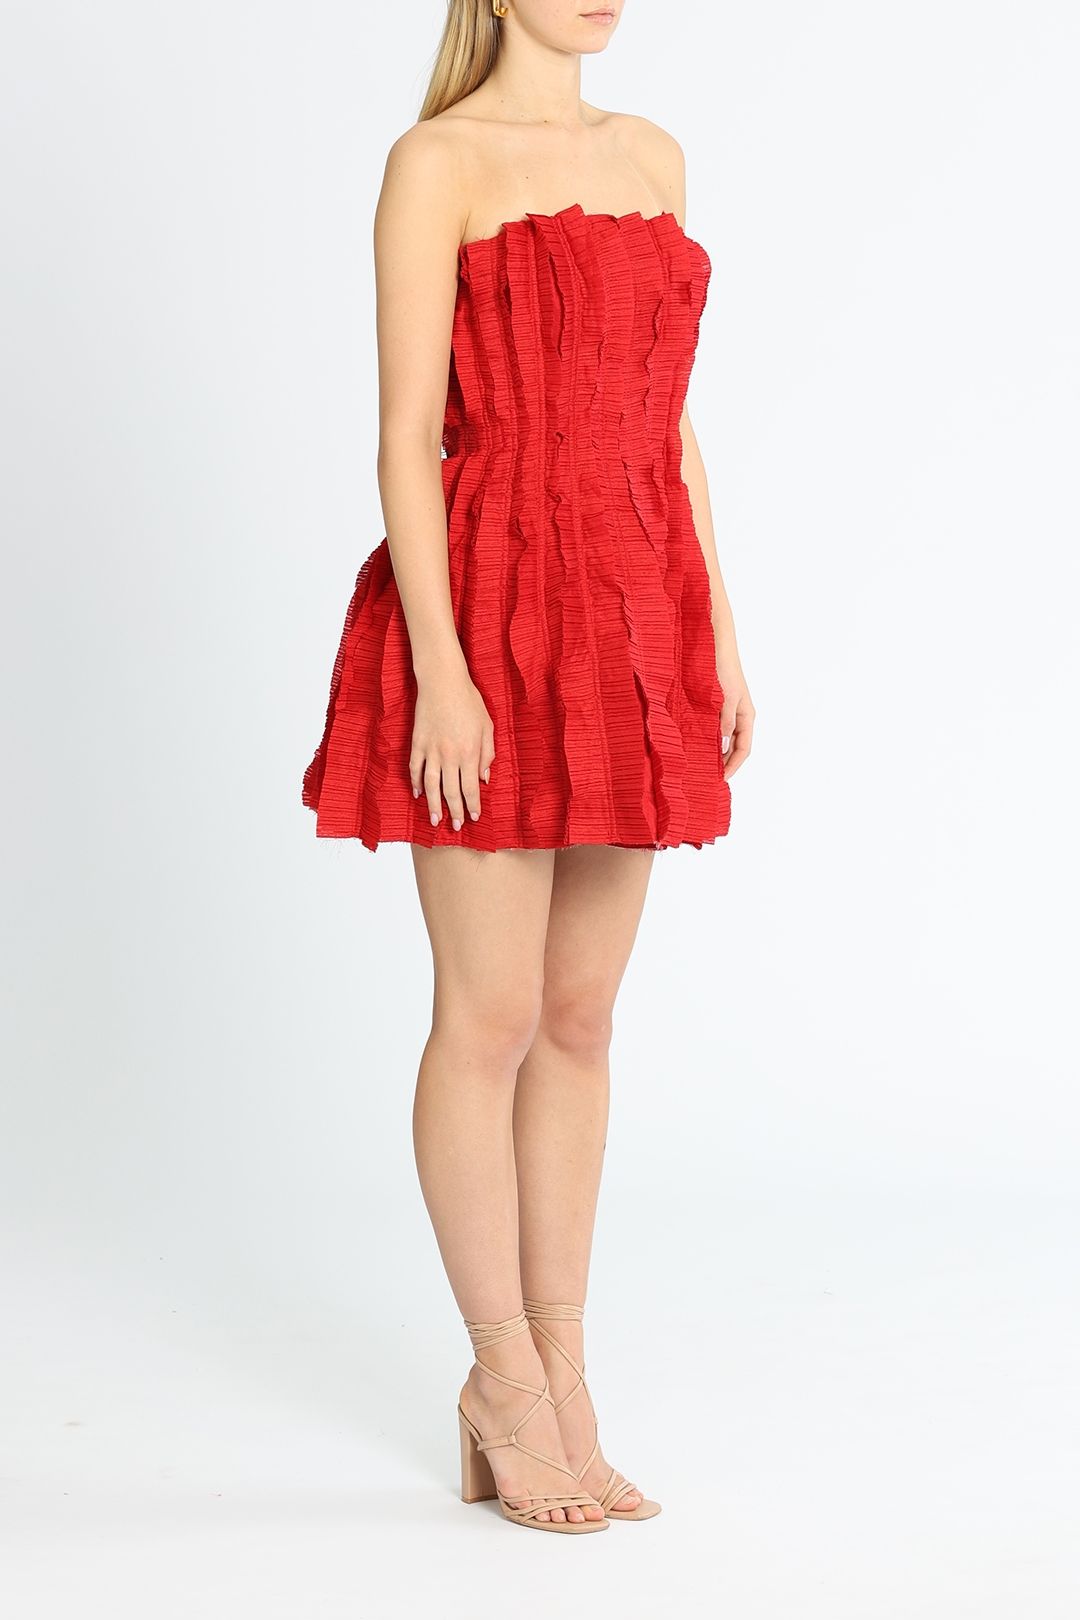 AJE Hybrid Mini Dress Red Strapless